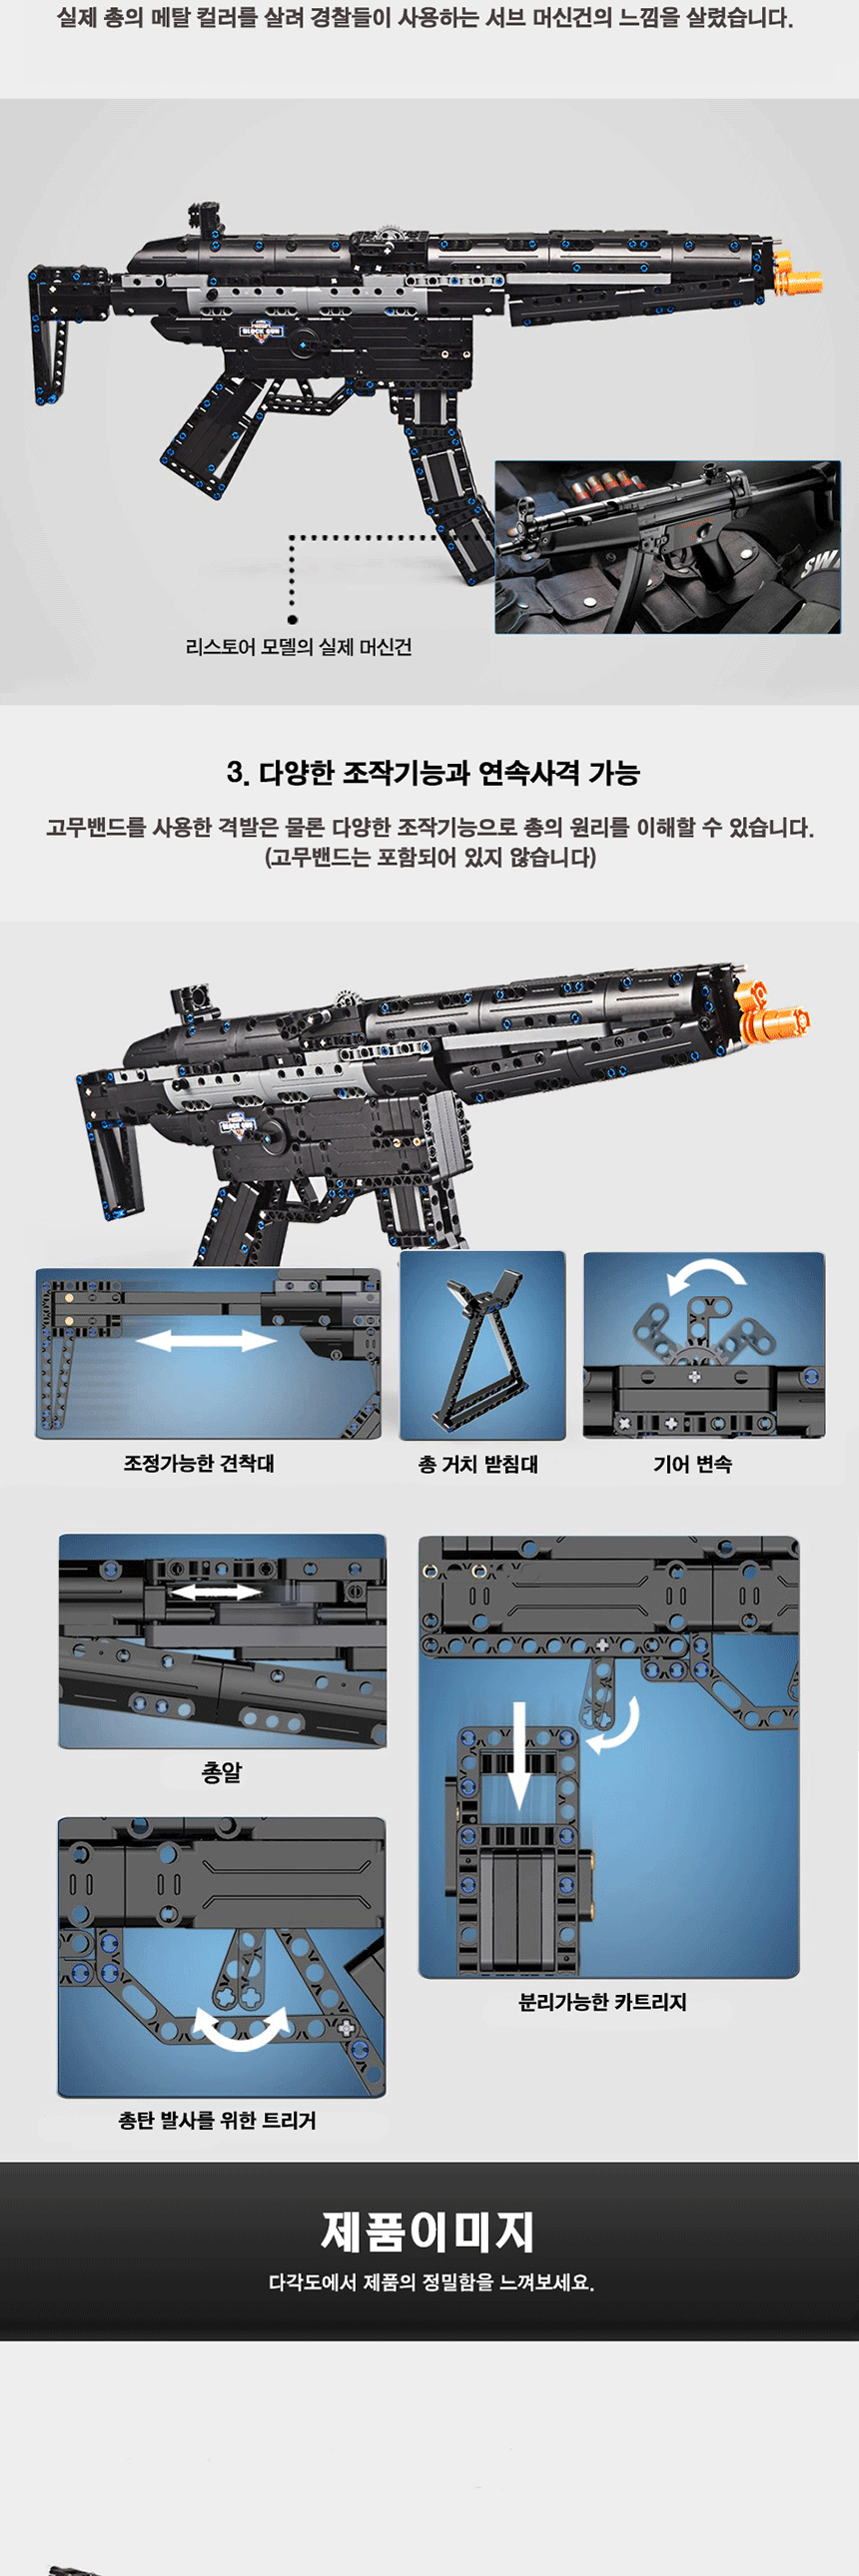 MP5_machinegun3.gif